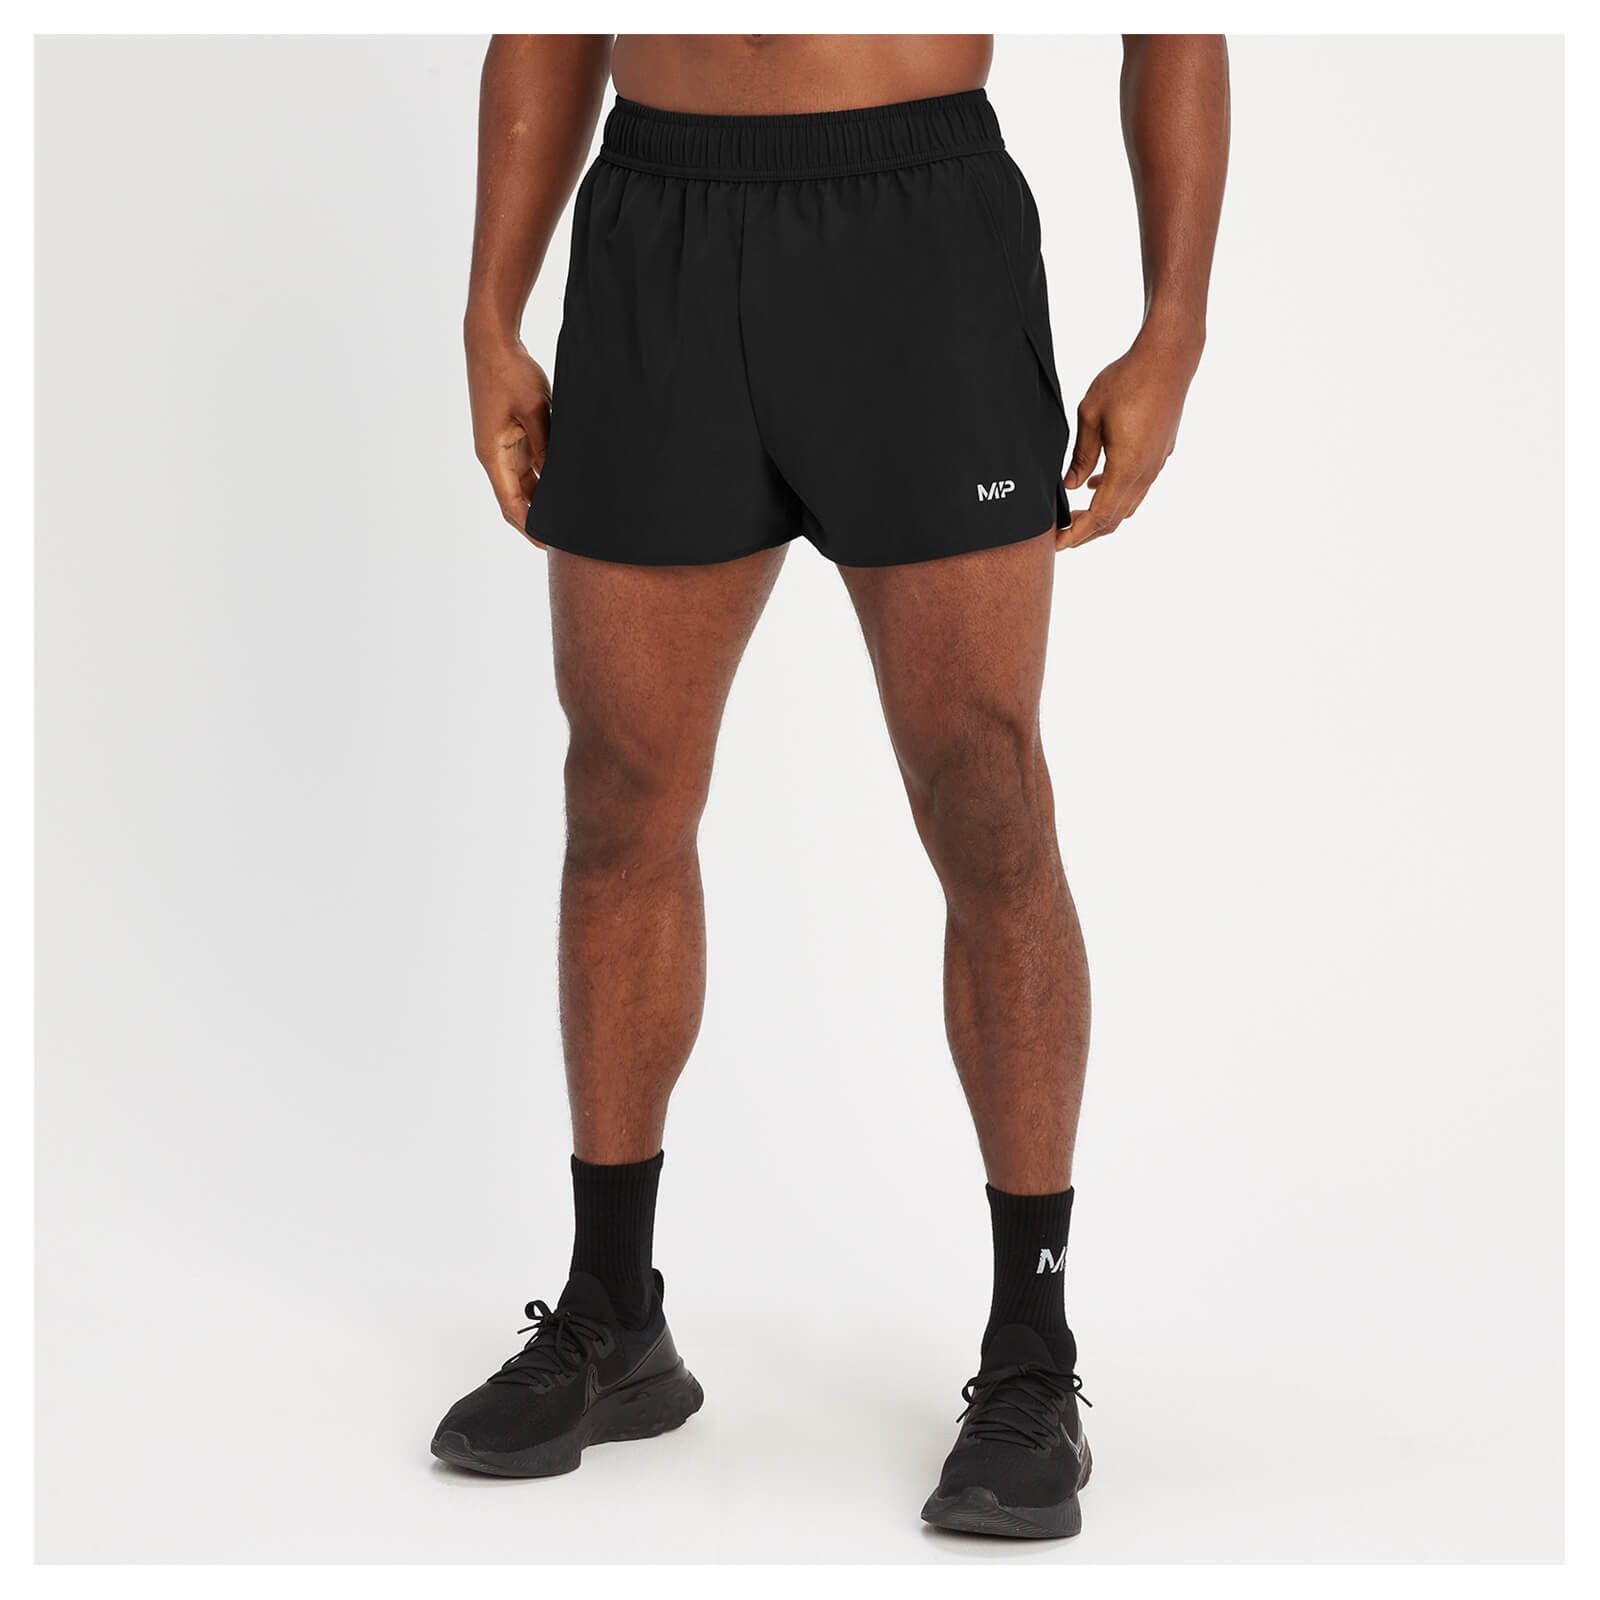 Mp Men's Velocity 3 Inch Shorts - Black - Xxxl